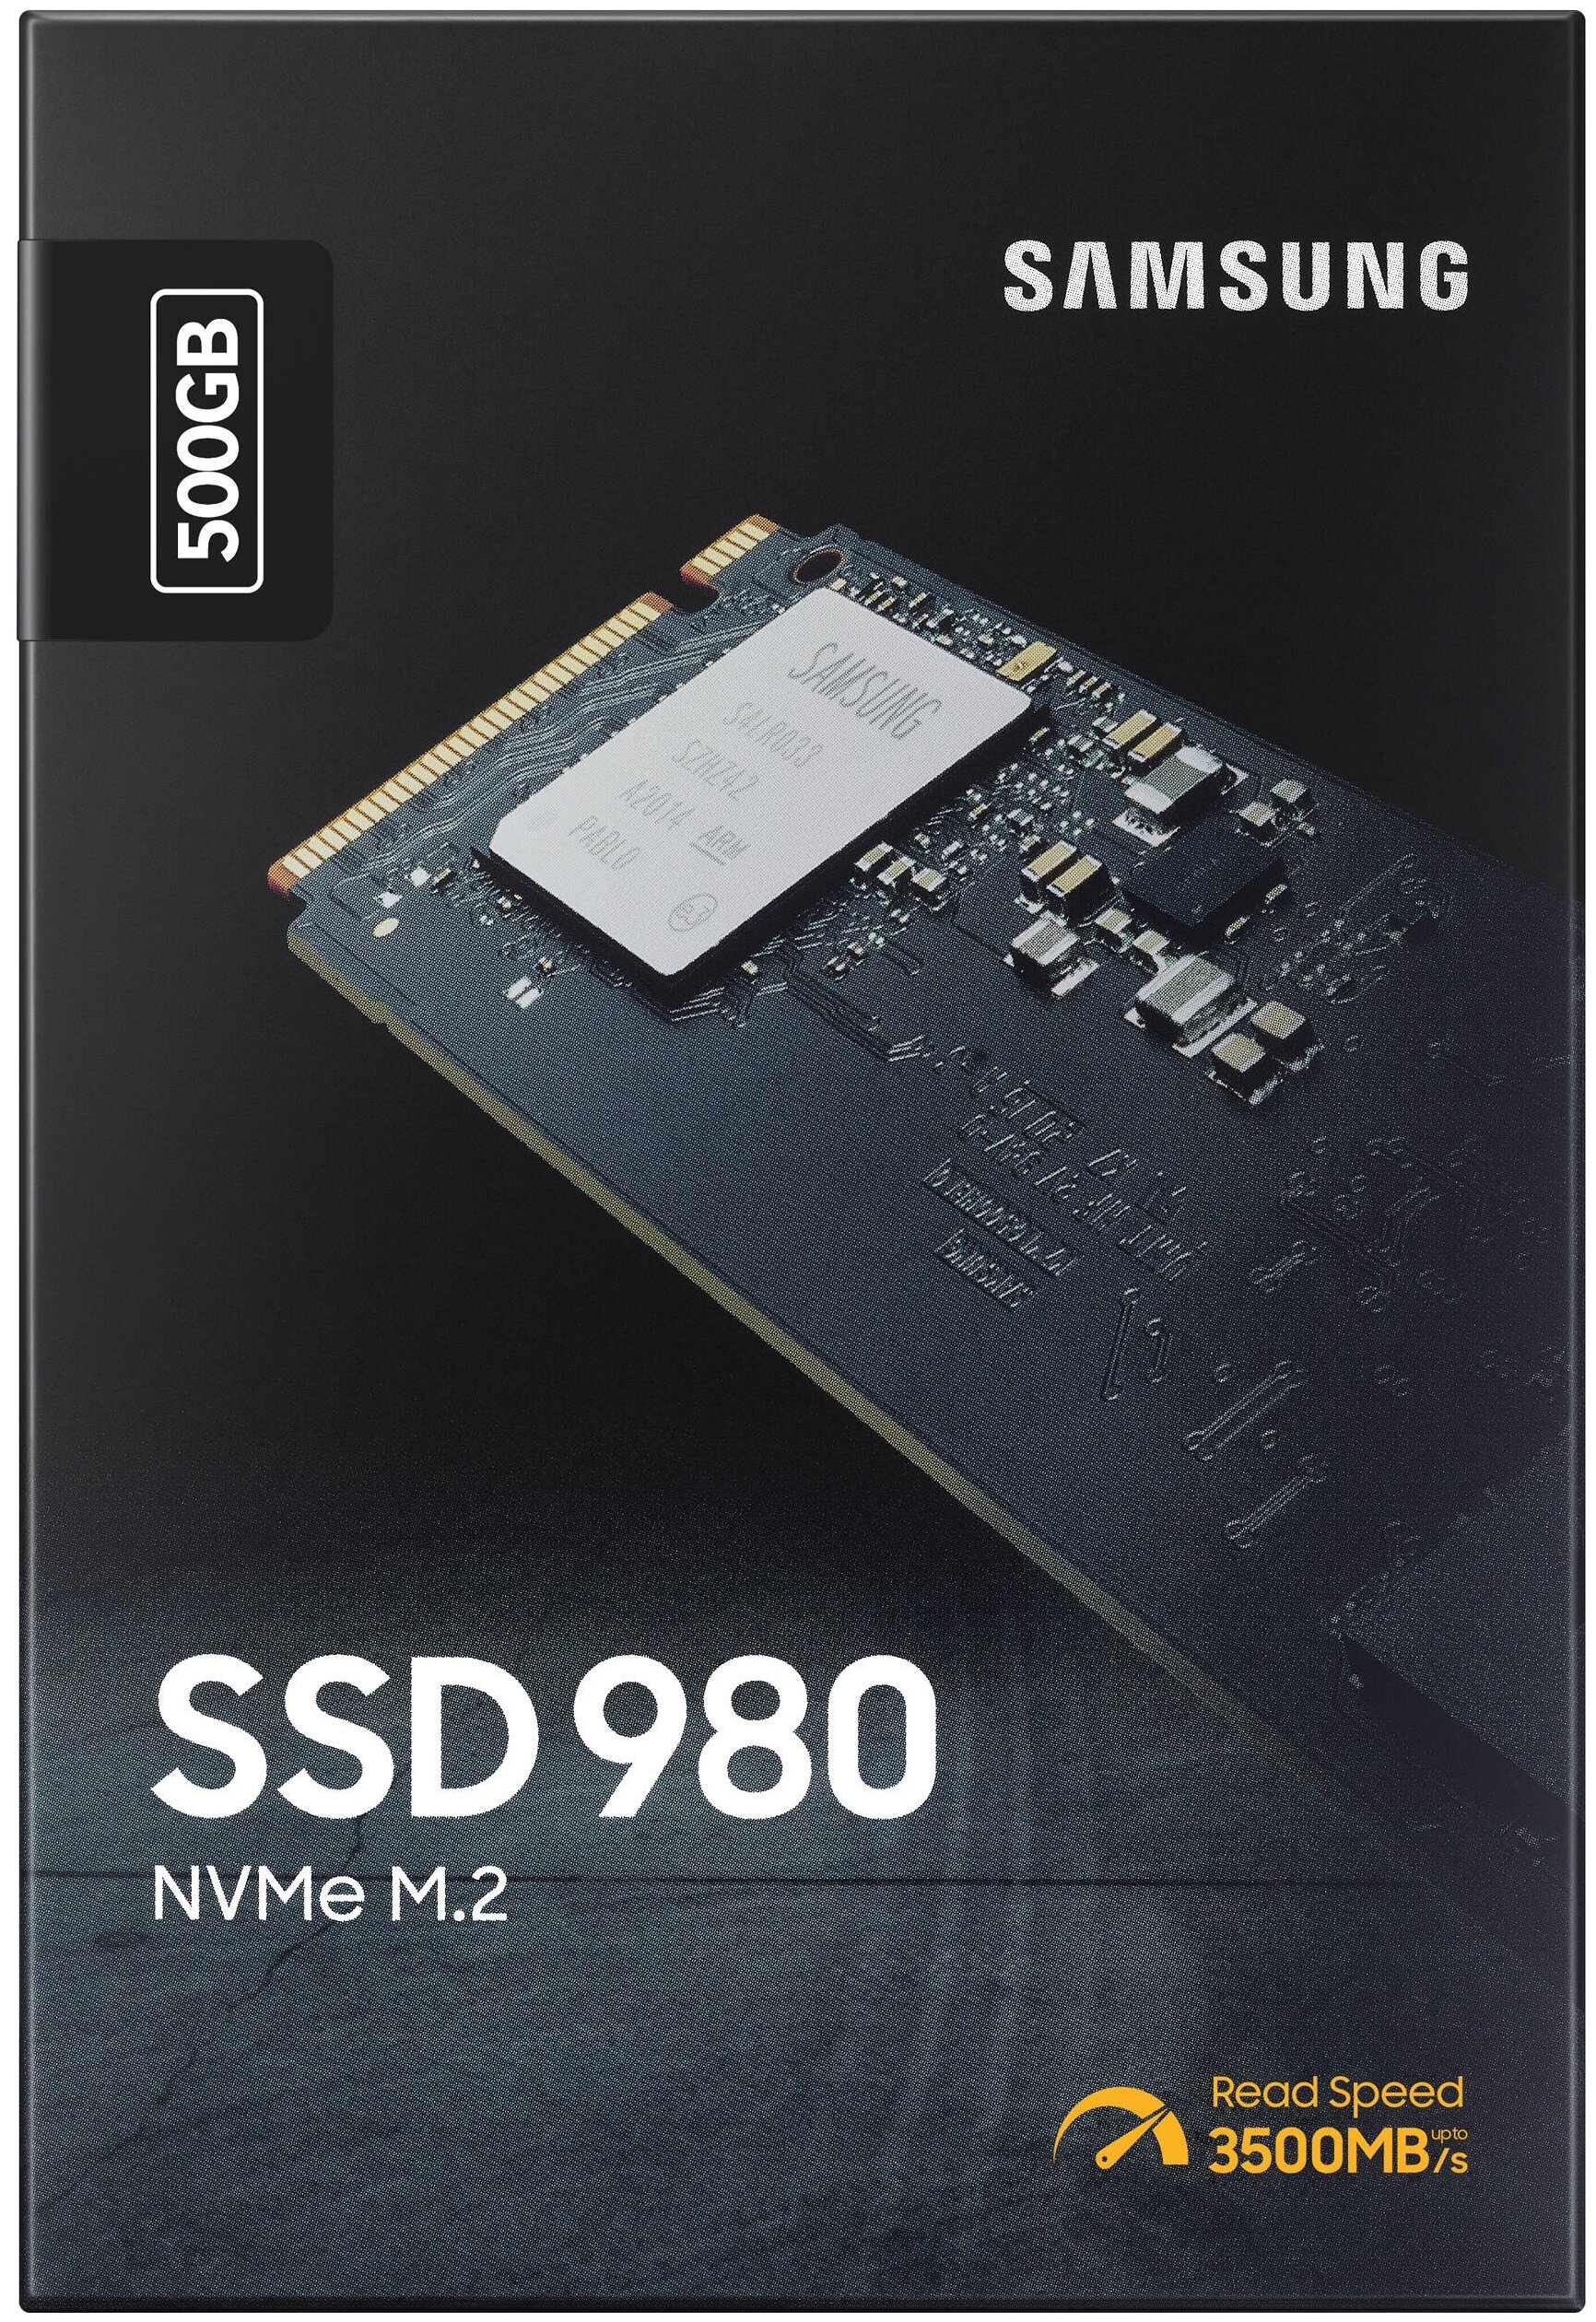 Samsung 980 500 M.2 MZ-V8V500BW - разъем: M.2